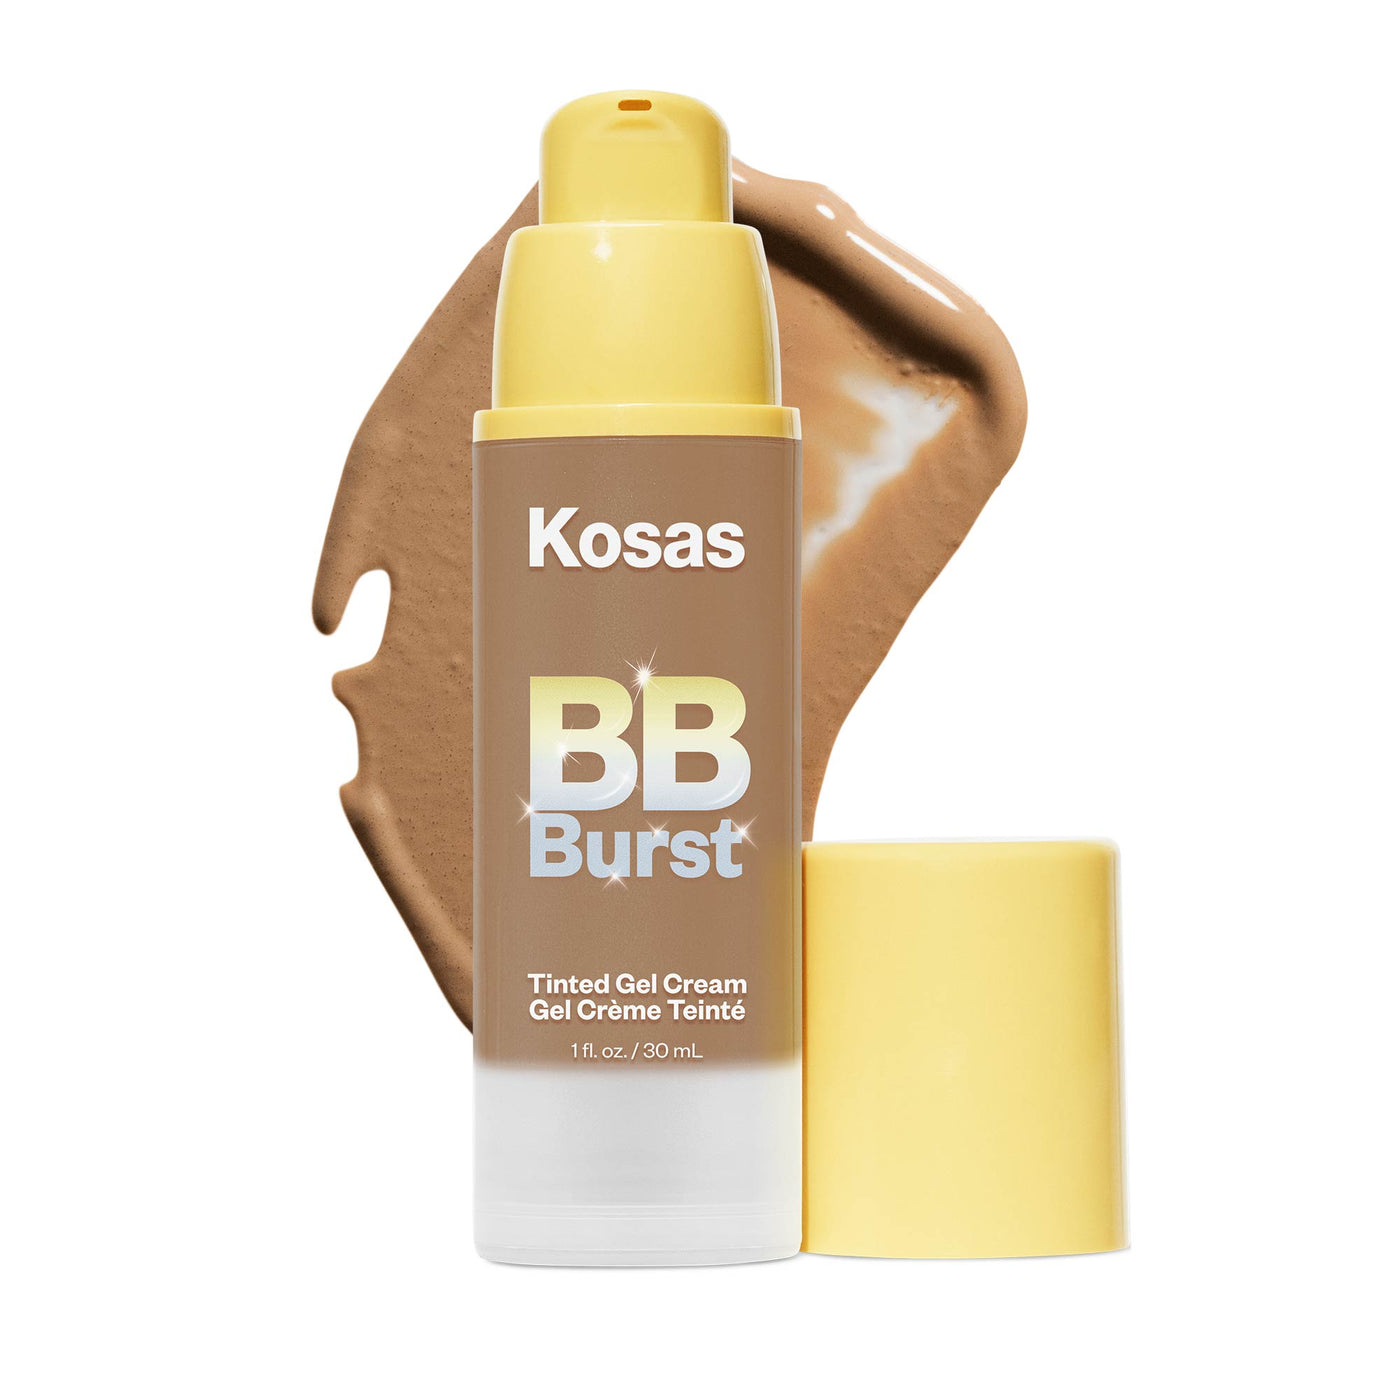 Kosas BB Burst Tinted Gel Cream 34